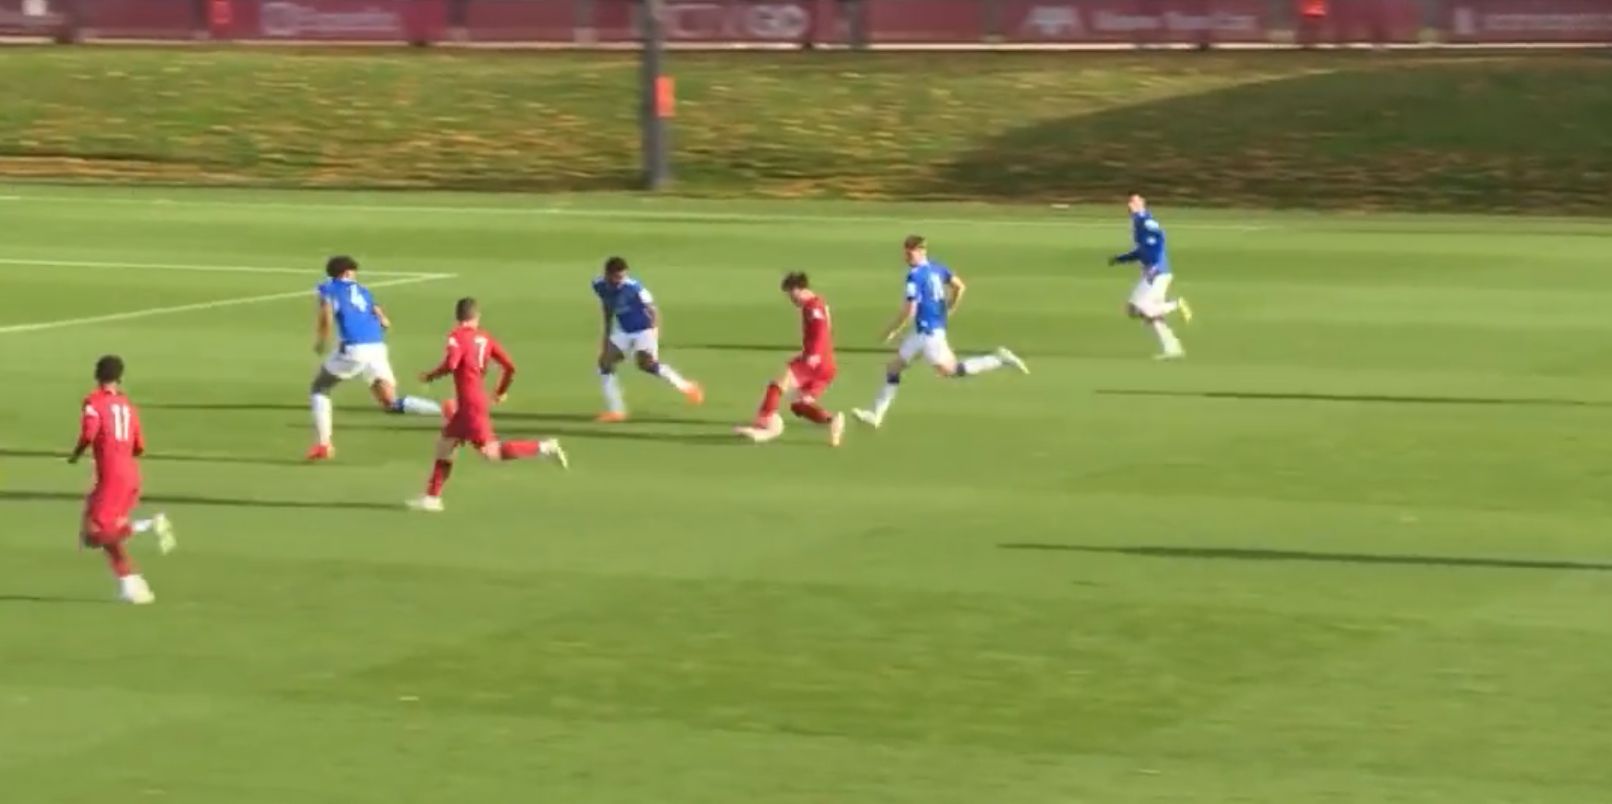 (Video) Ben Doak’s impressive run v Everton U21s shows LFC have a frightening talent on their hands